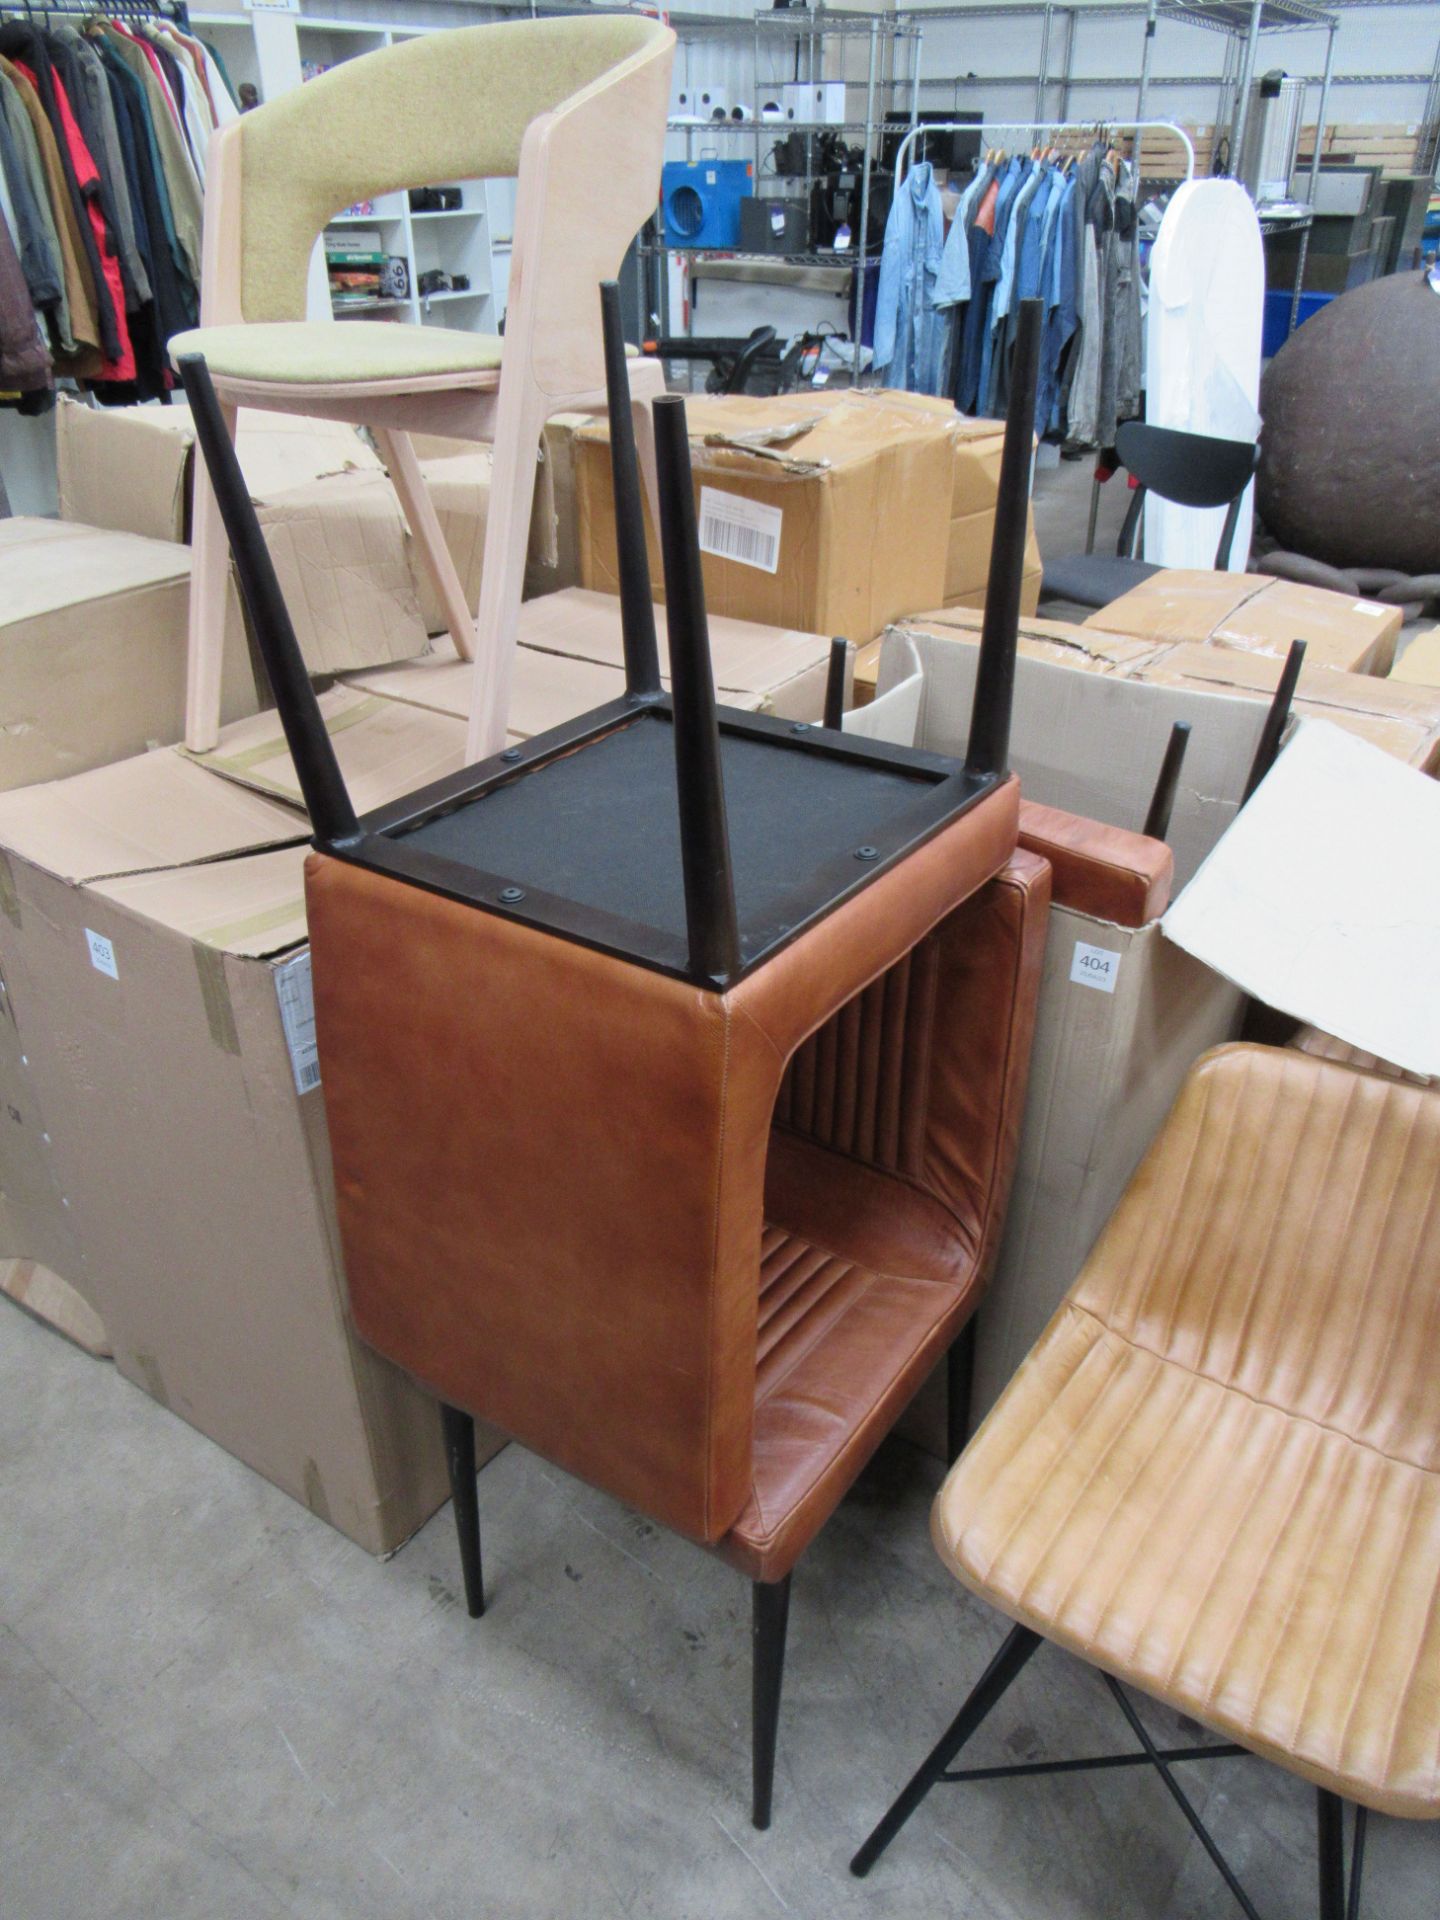 4x Nina Carver Chairs - 'Walnut Colour Upholstry, Black Frame' - Image 3 of 3